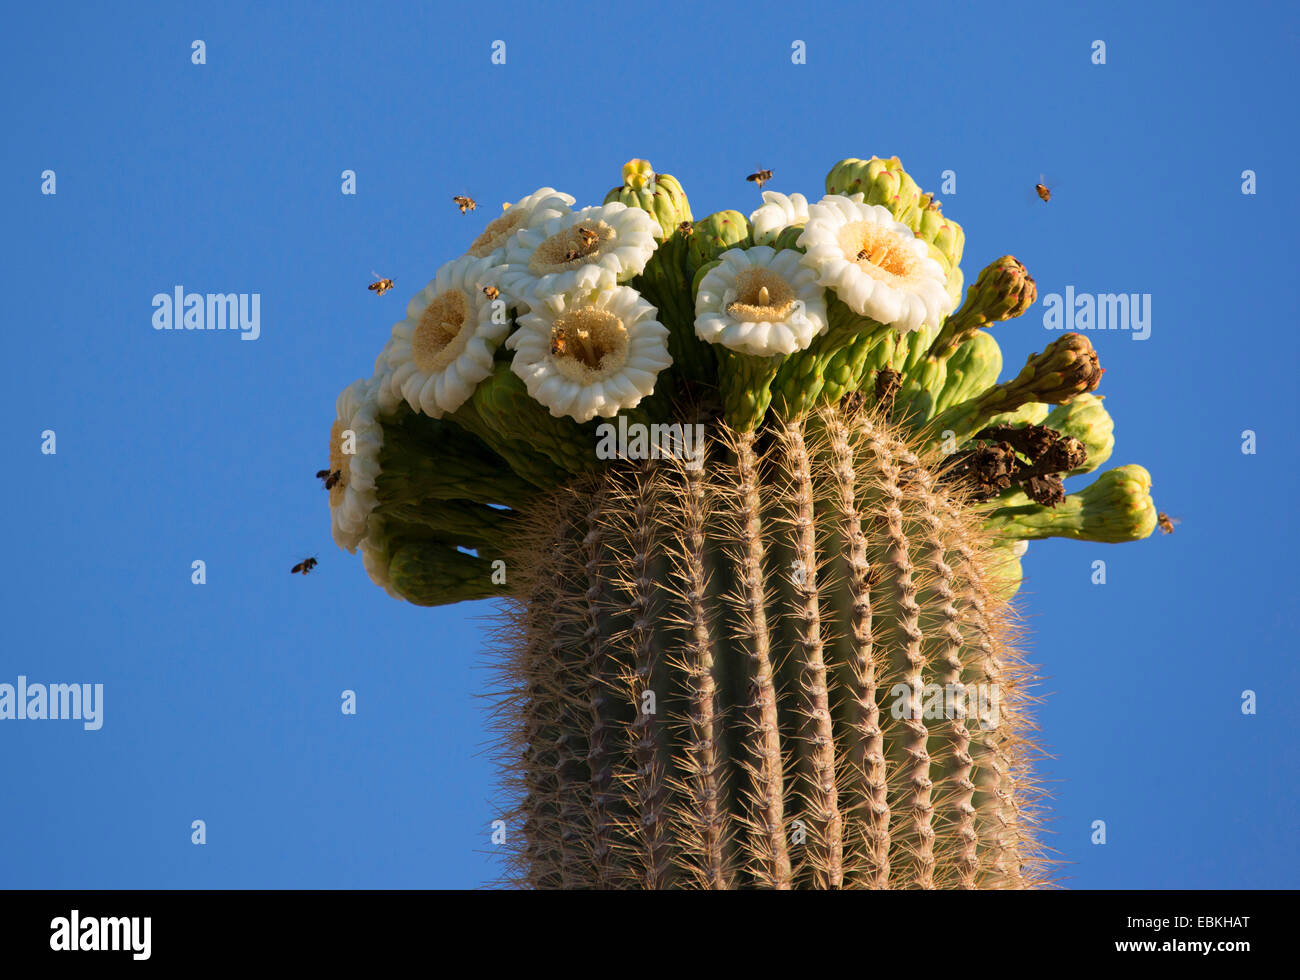 Cacto saguaro (Carnegiea gigantea, Cereus giganteus), floreciendo, Phoenix, Arizona, EE.UU. Foto de stock